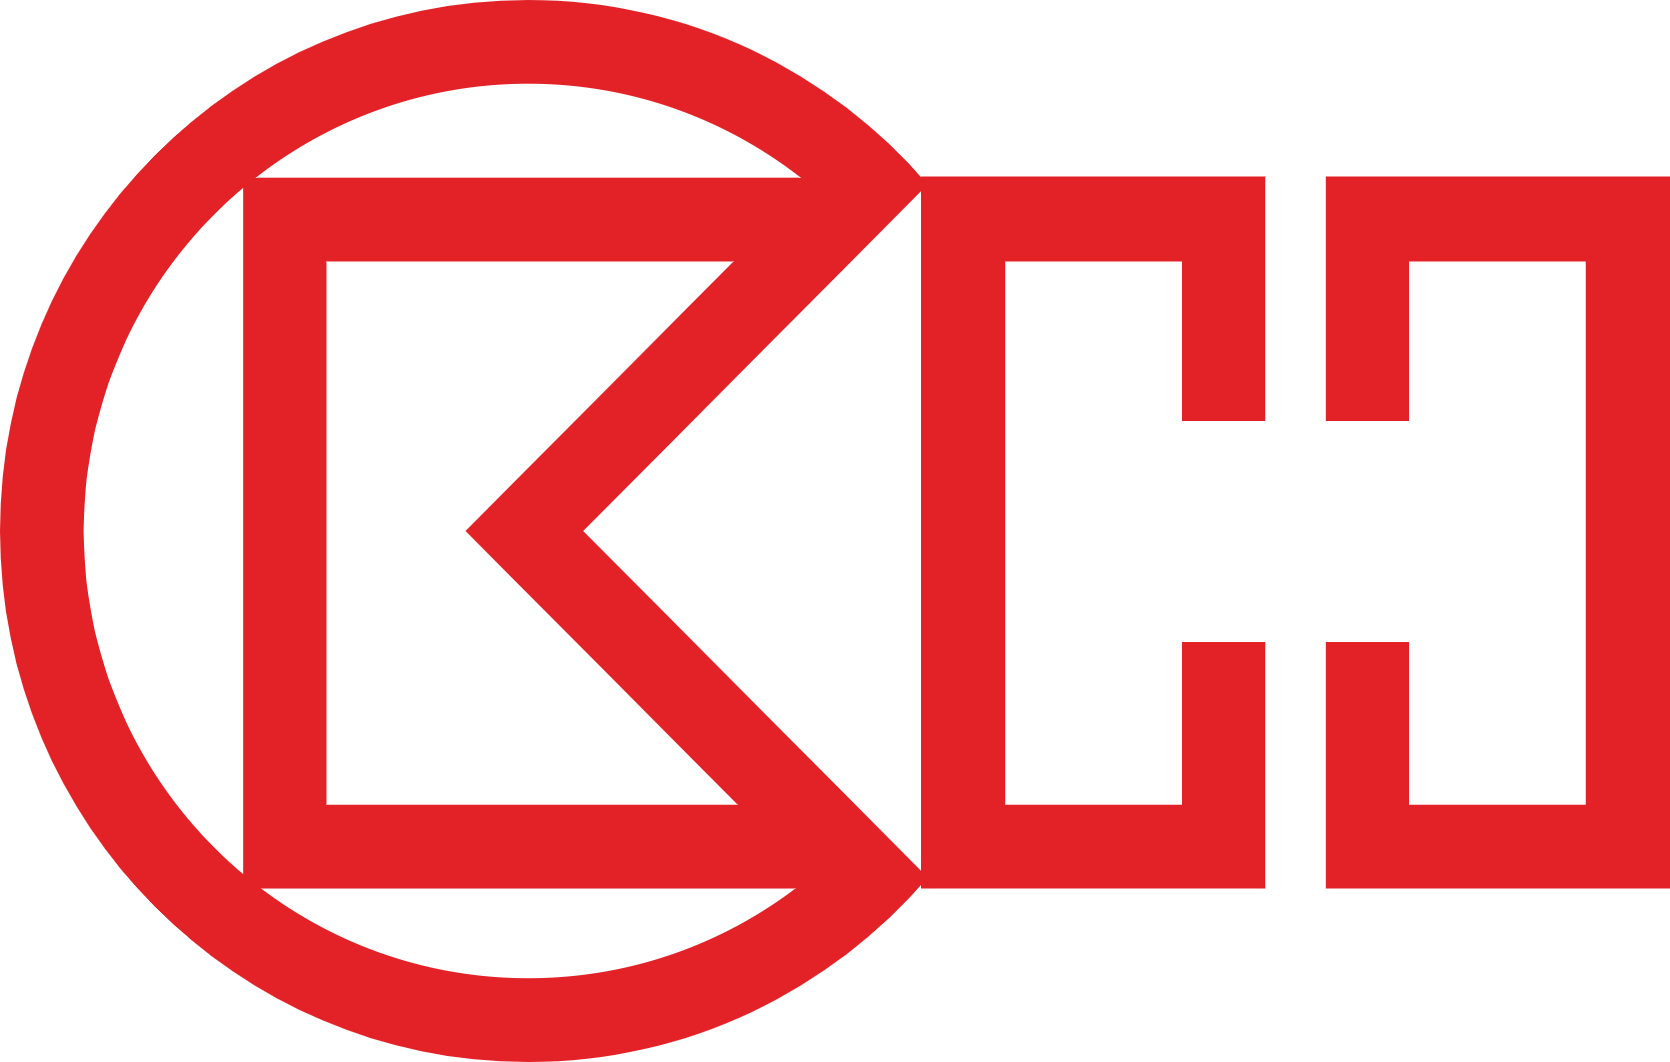 CK Hutchison Holdings logo (PNG transparent)